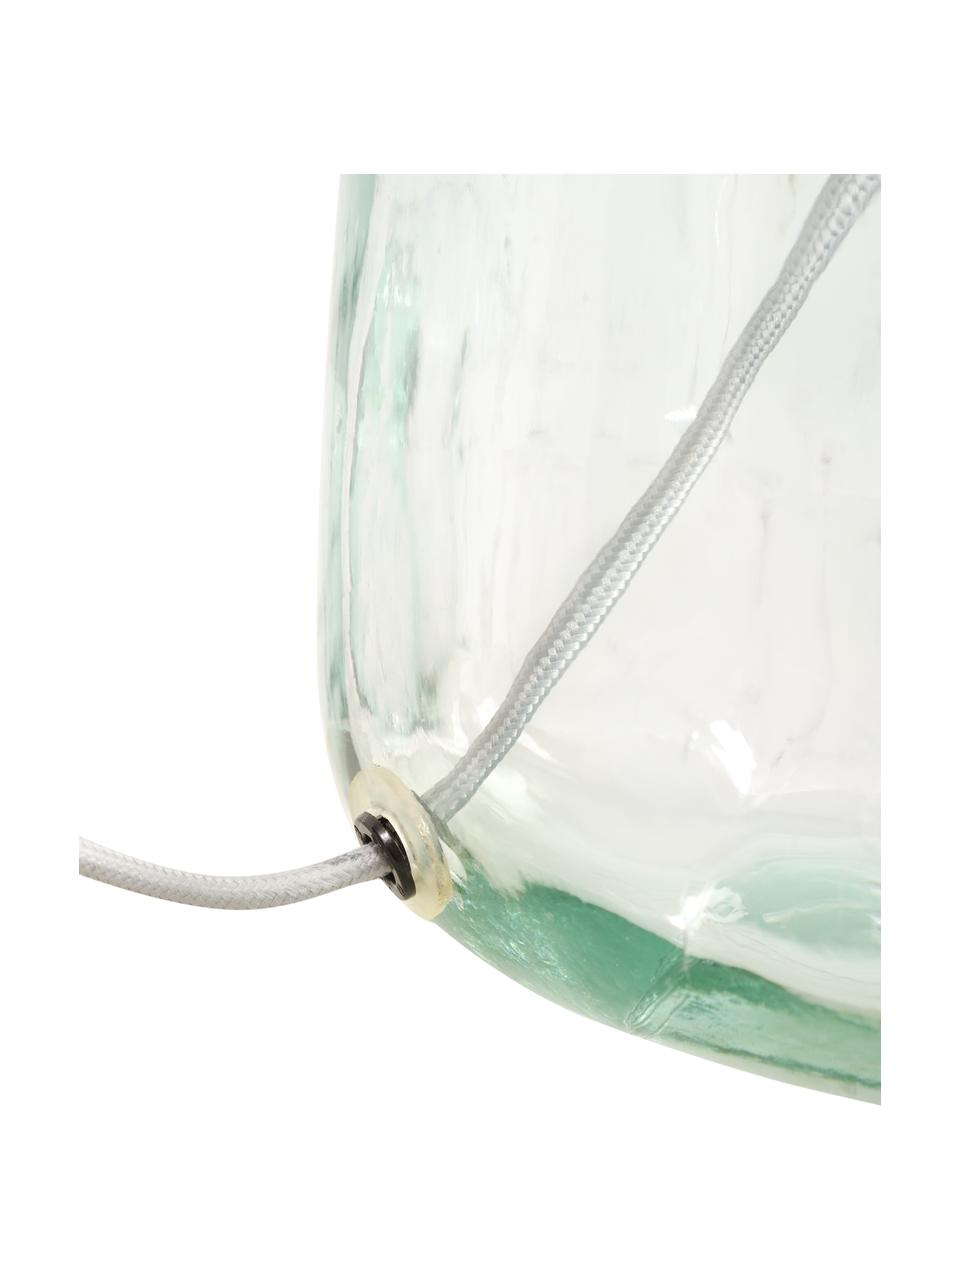 Tischlampe Murano aus recycletem Glas, Lampenschirm: Leinenstoff, Lampenfuß: Recycletes Glas, Grün, Transparent, Grau, Ø 32 cm x H 34 cm